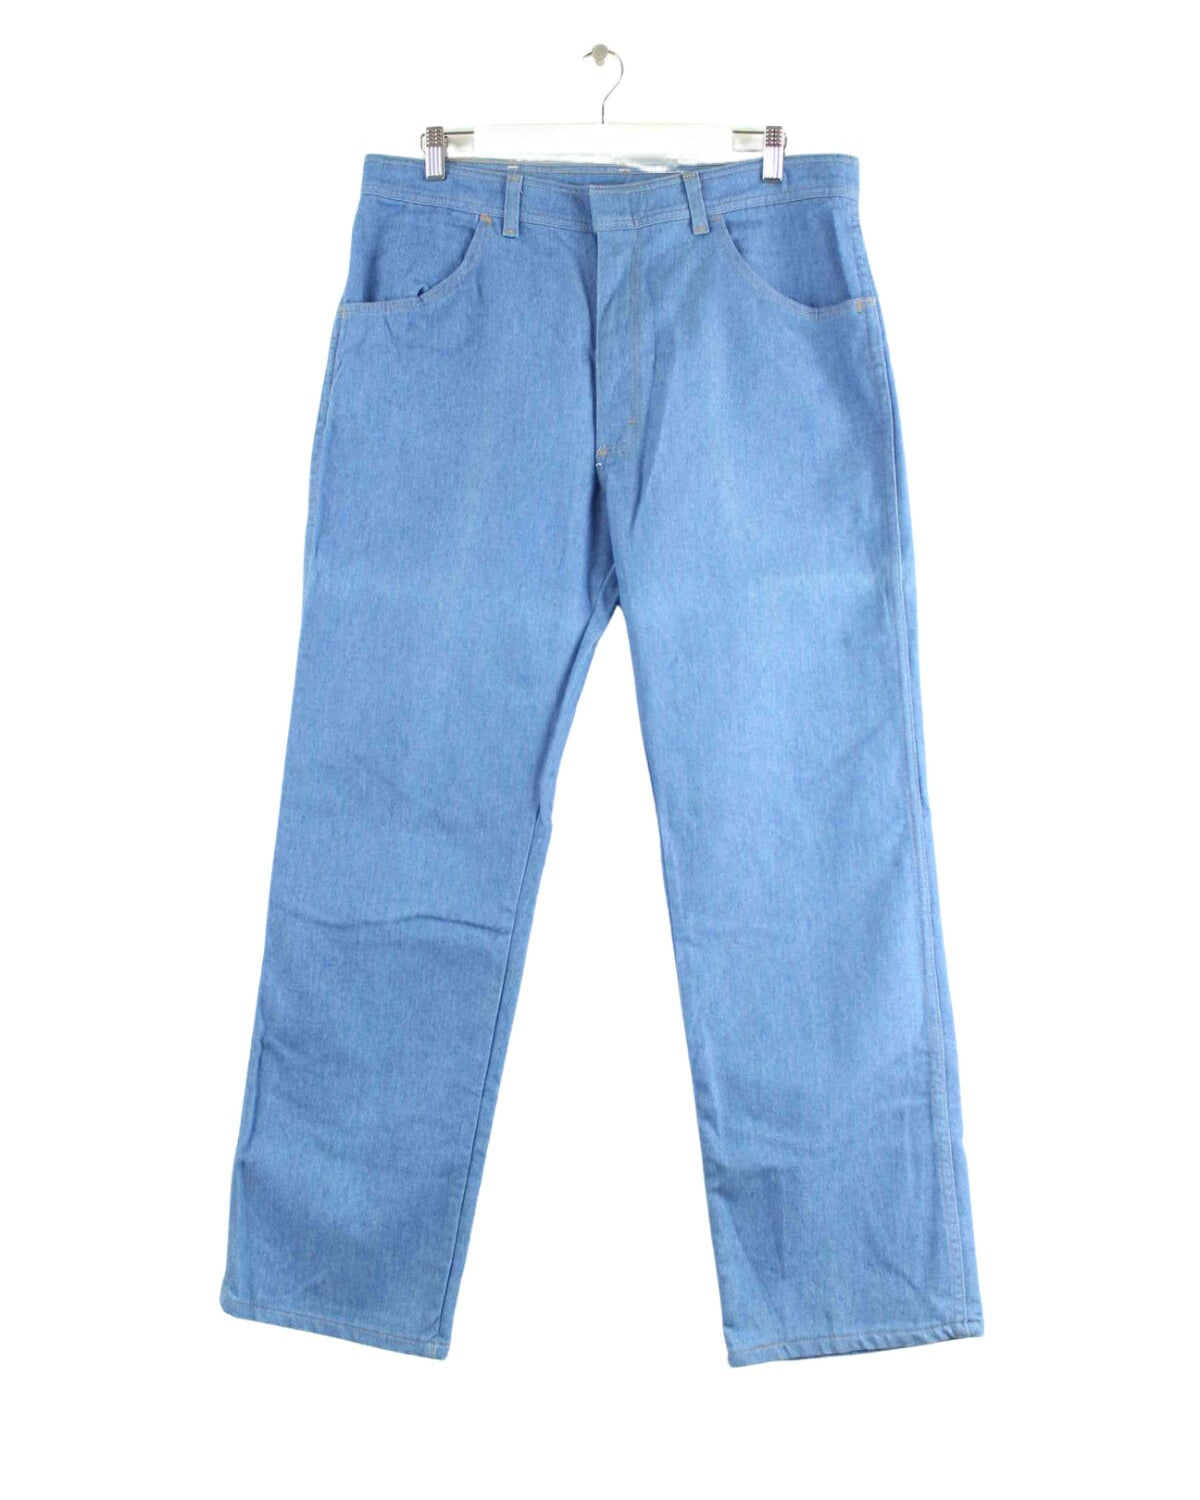 Wrangler 00s Jeans Blau W23 L30 (front image)